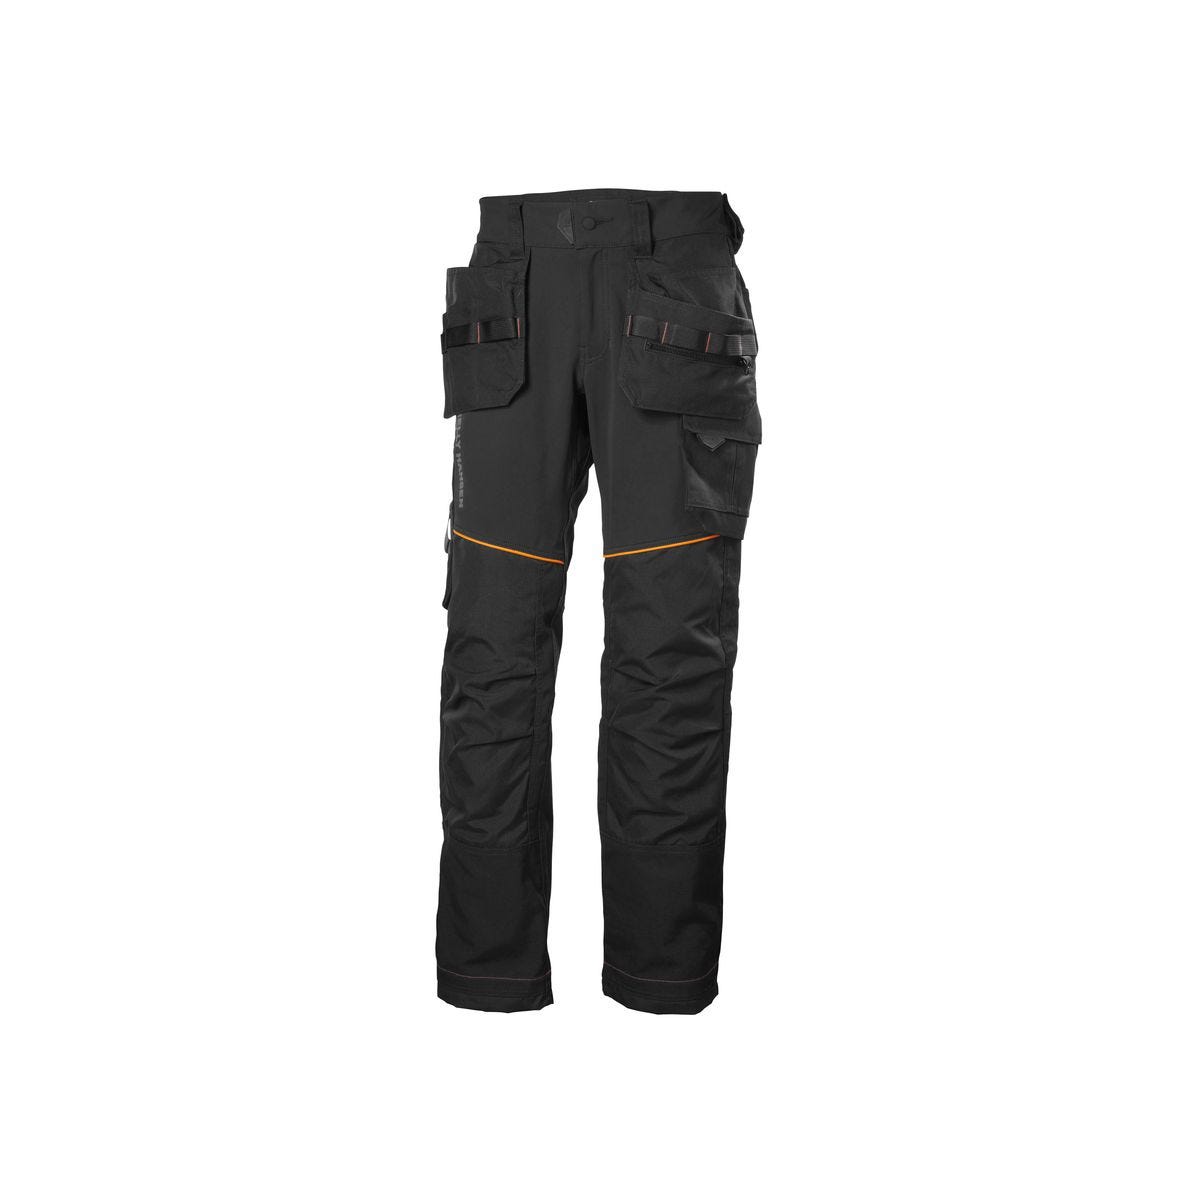 Pantalon Chelsea Evolution Construction Noir - Helly Hansen - Taille 50 0